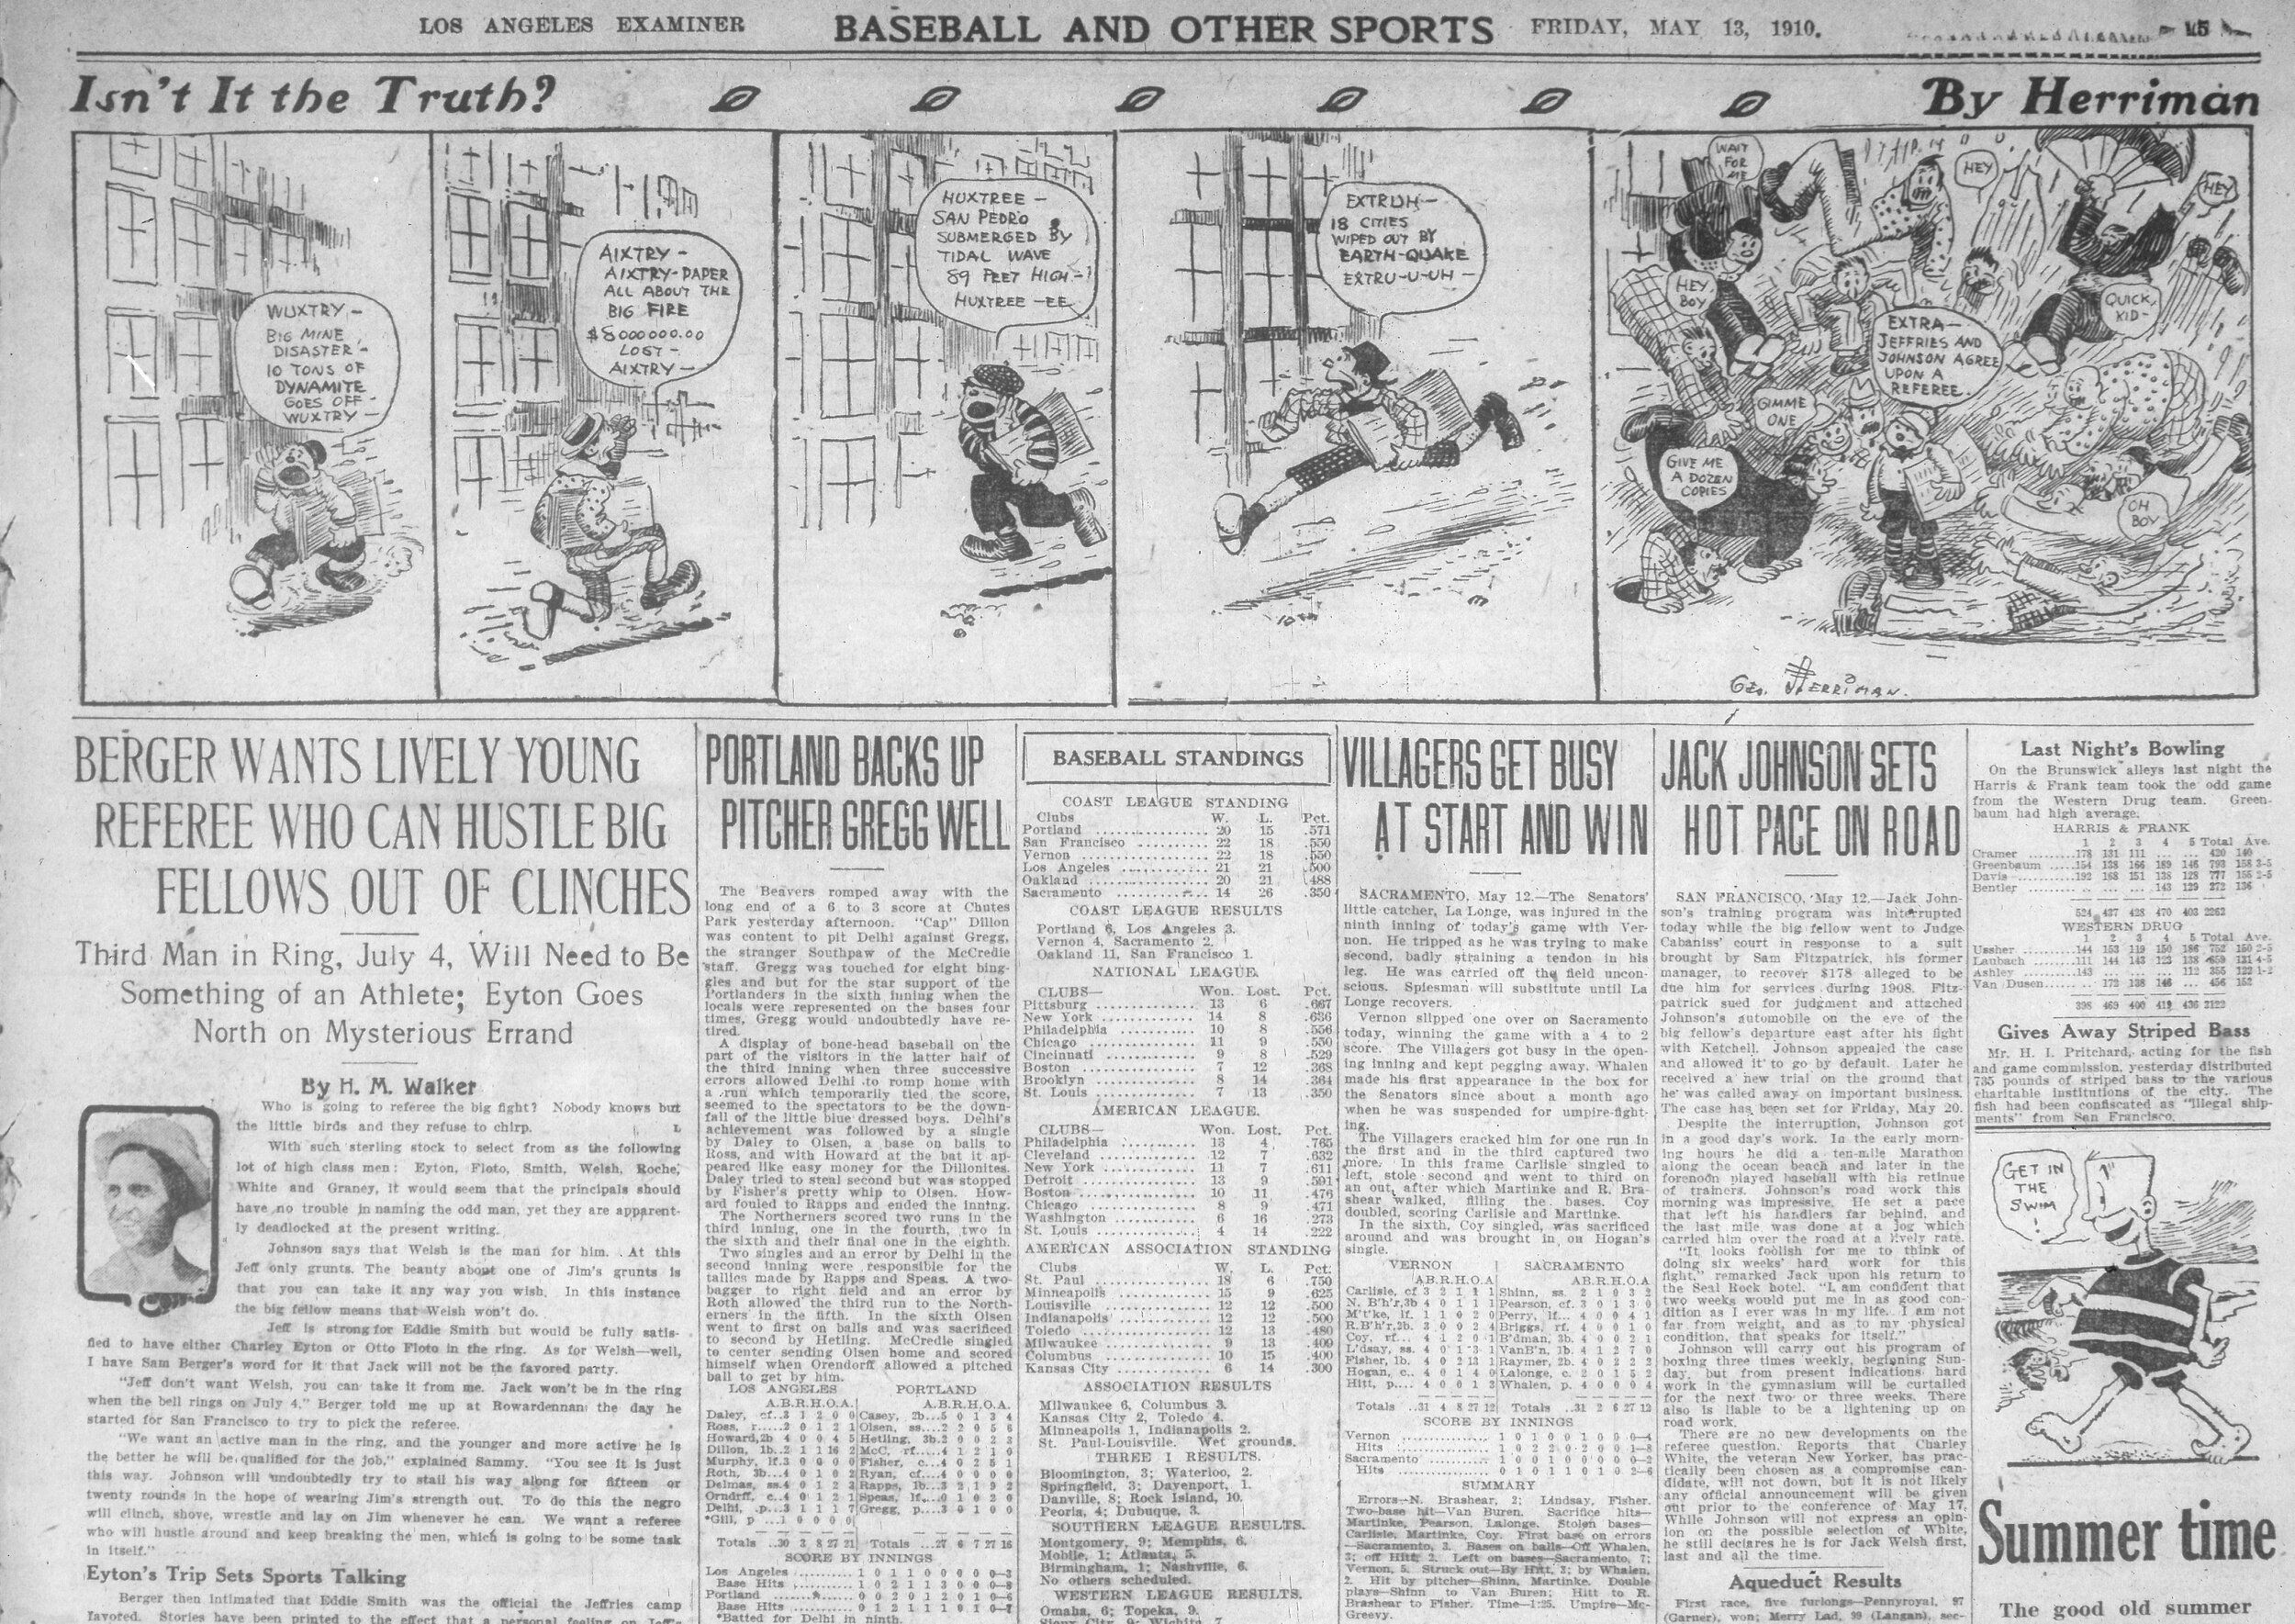 11-laexaminer-05-13-1910-herriman-comic-on-jeffries-johnson.jpg